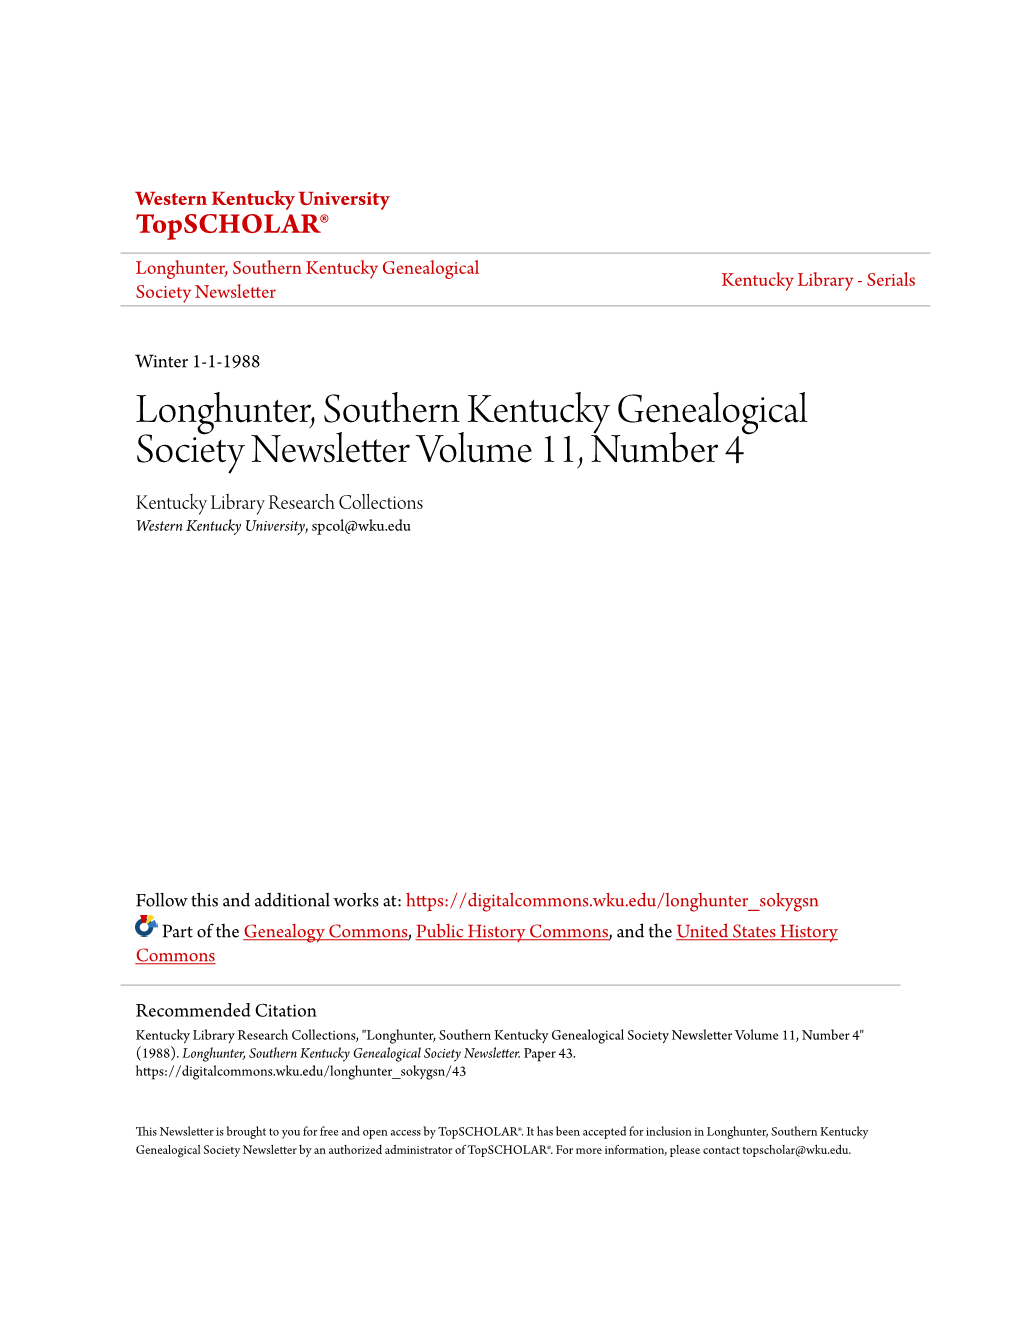 Longhunter, Southern Kentucky Genealogical Society Newsletter Volume 11, Number 4 Kentucky Library Research Collections Western Kentucky University, Spcol@Wku.Edu